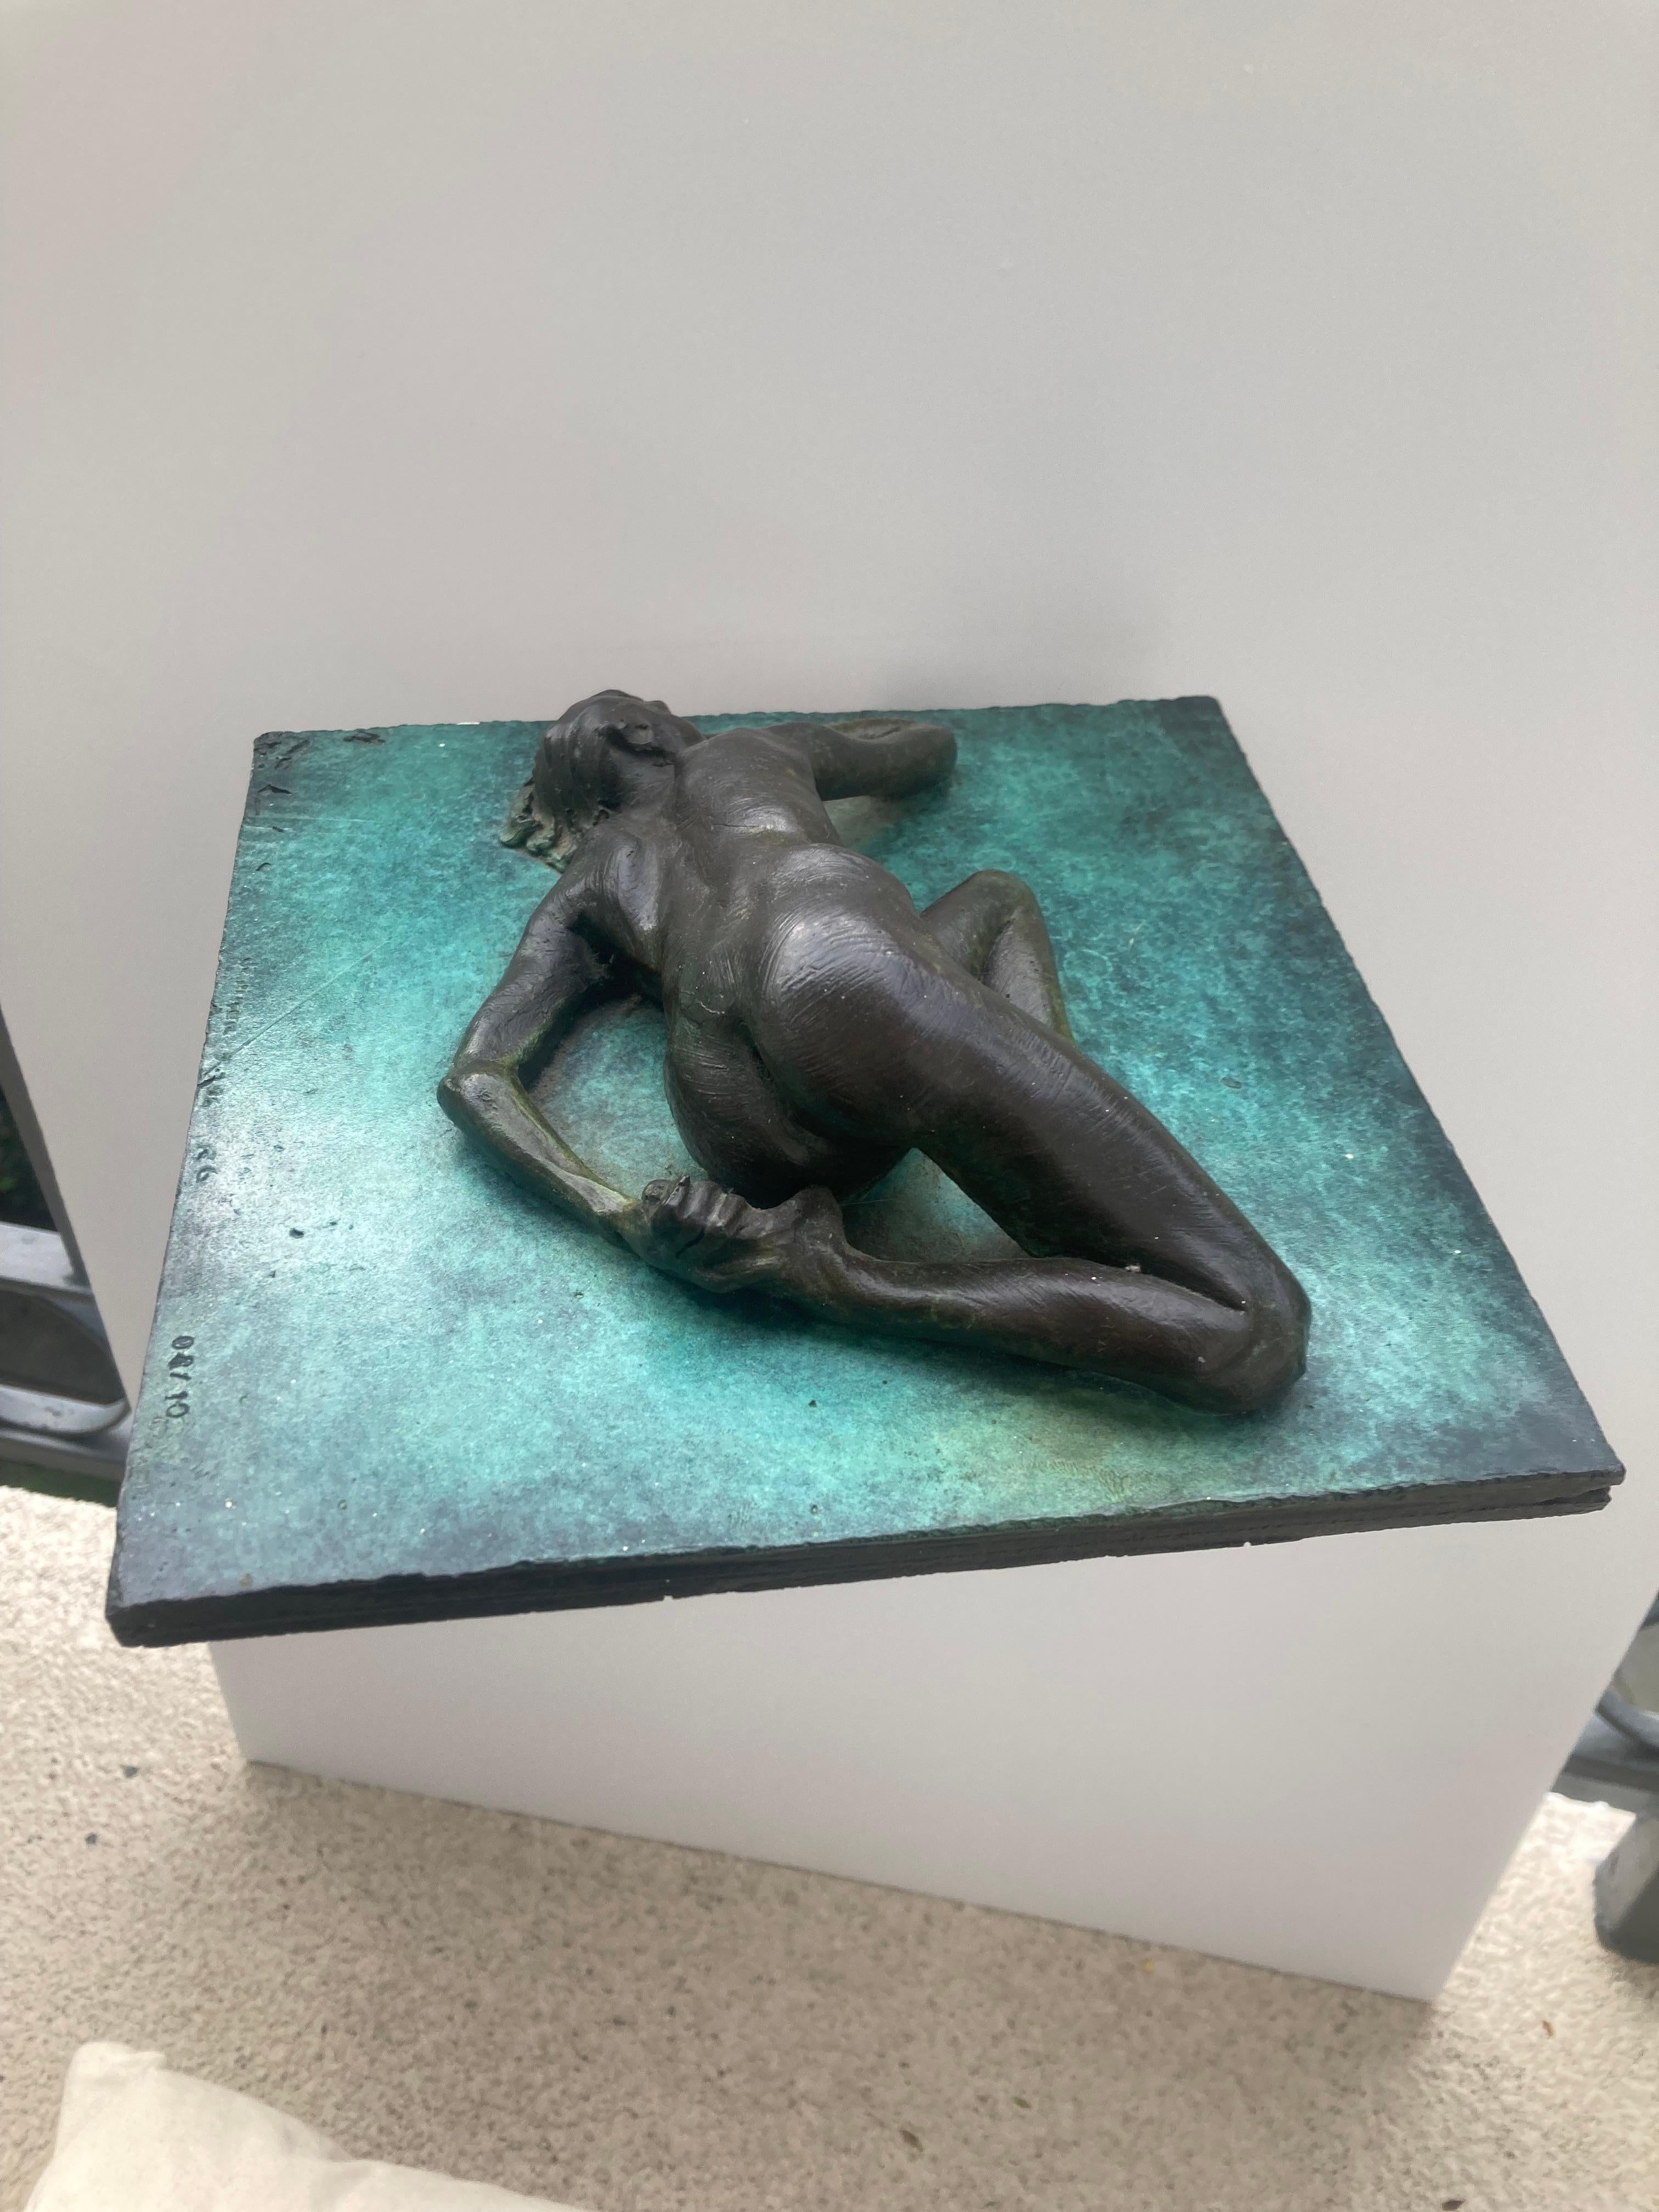 Sculpture de nu en bronze de Robert Graham, / mur/table TitreJennifer4/10,1996.RG en vente 3